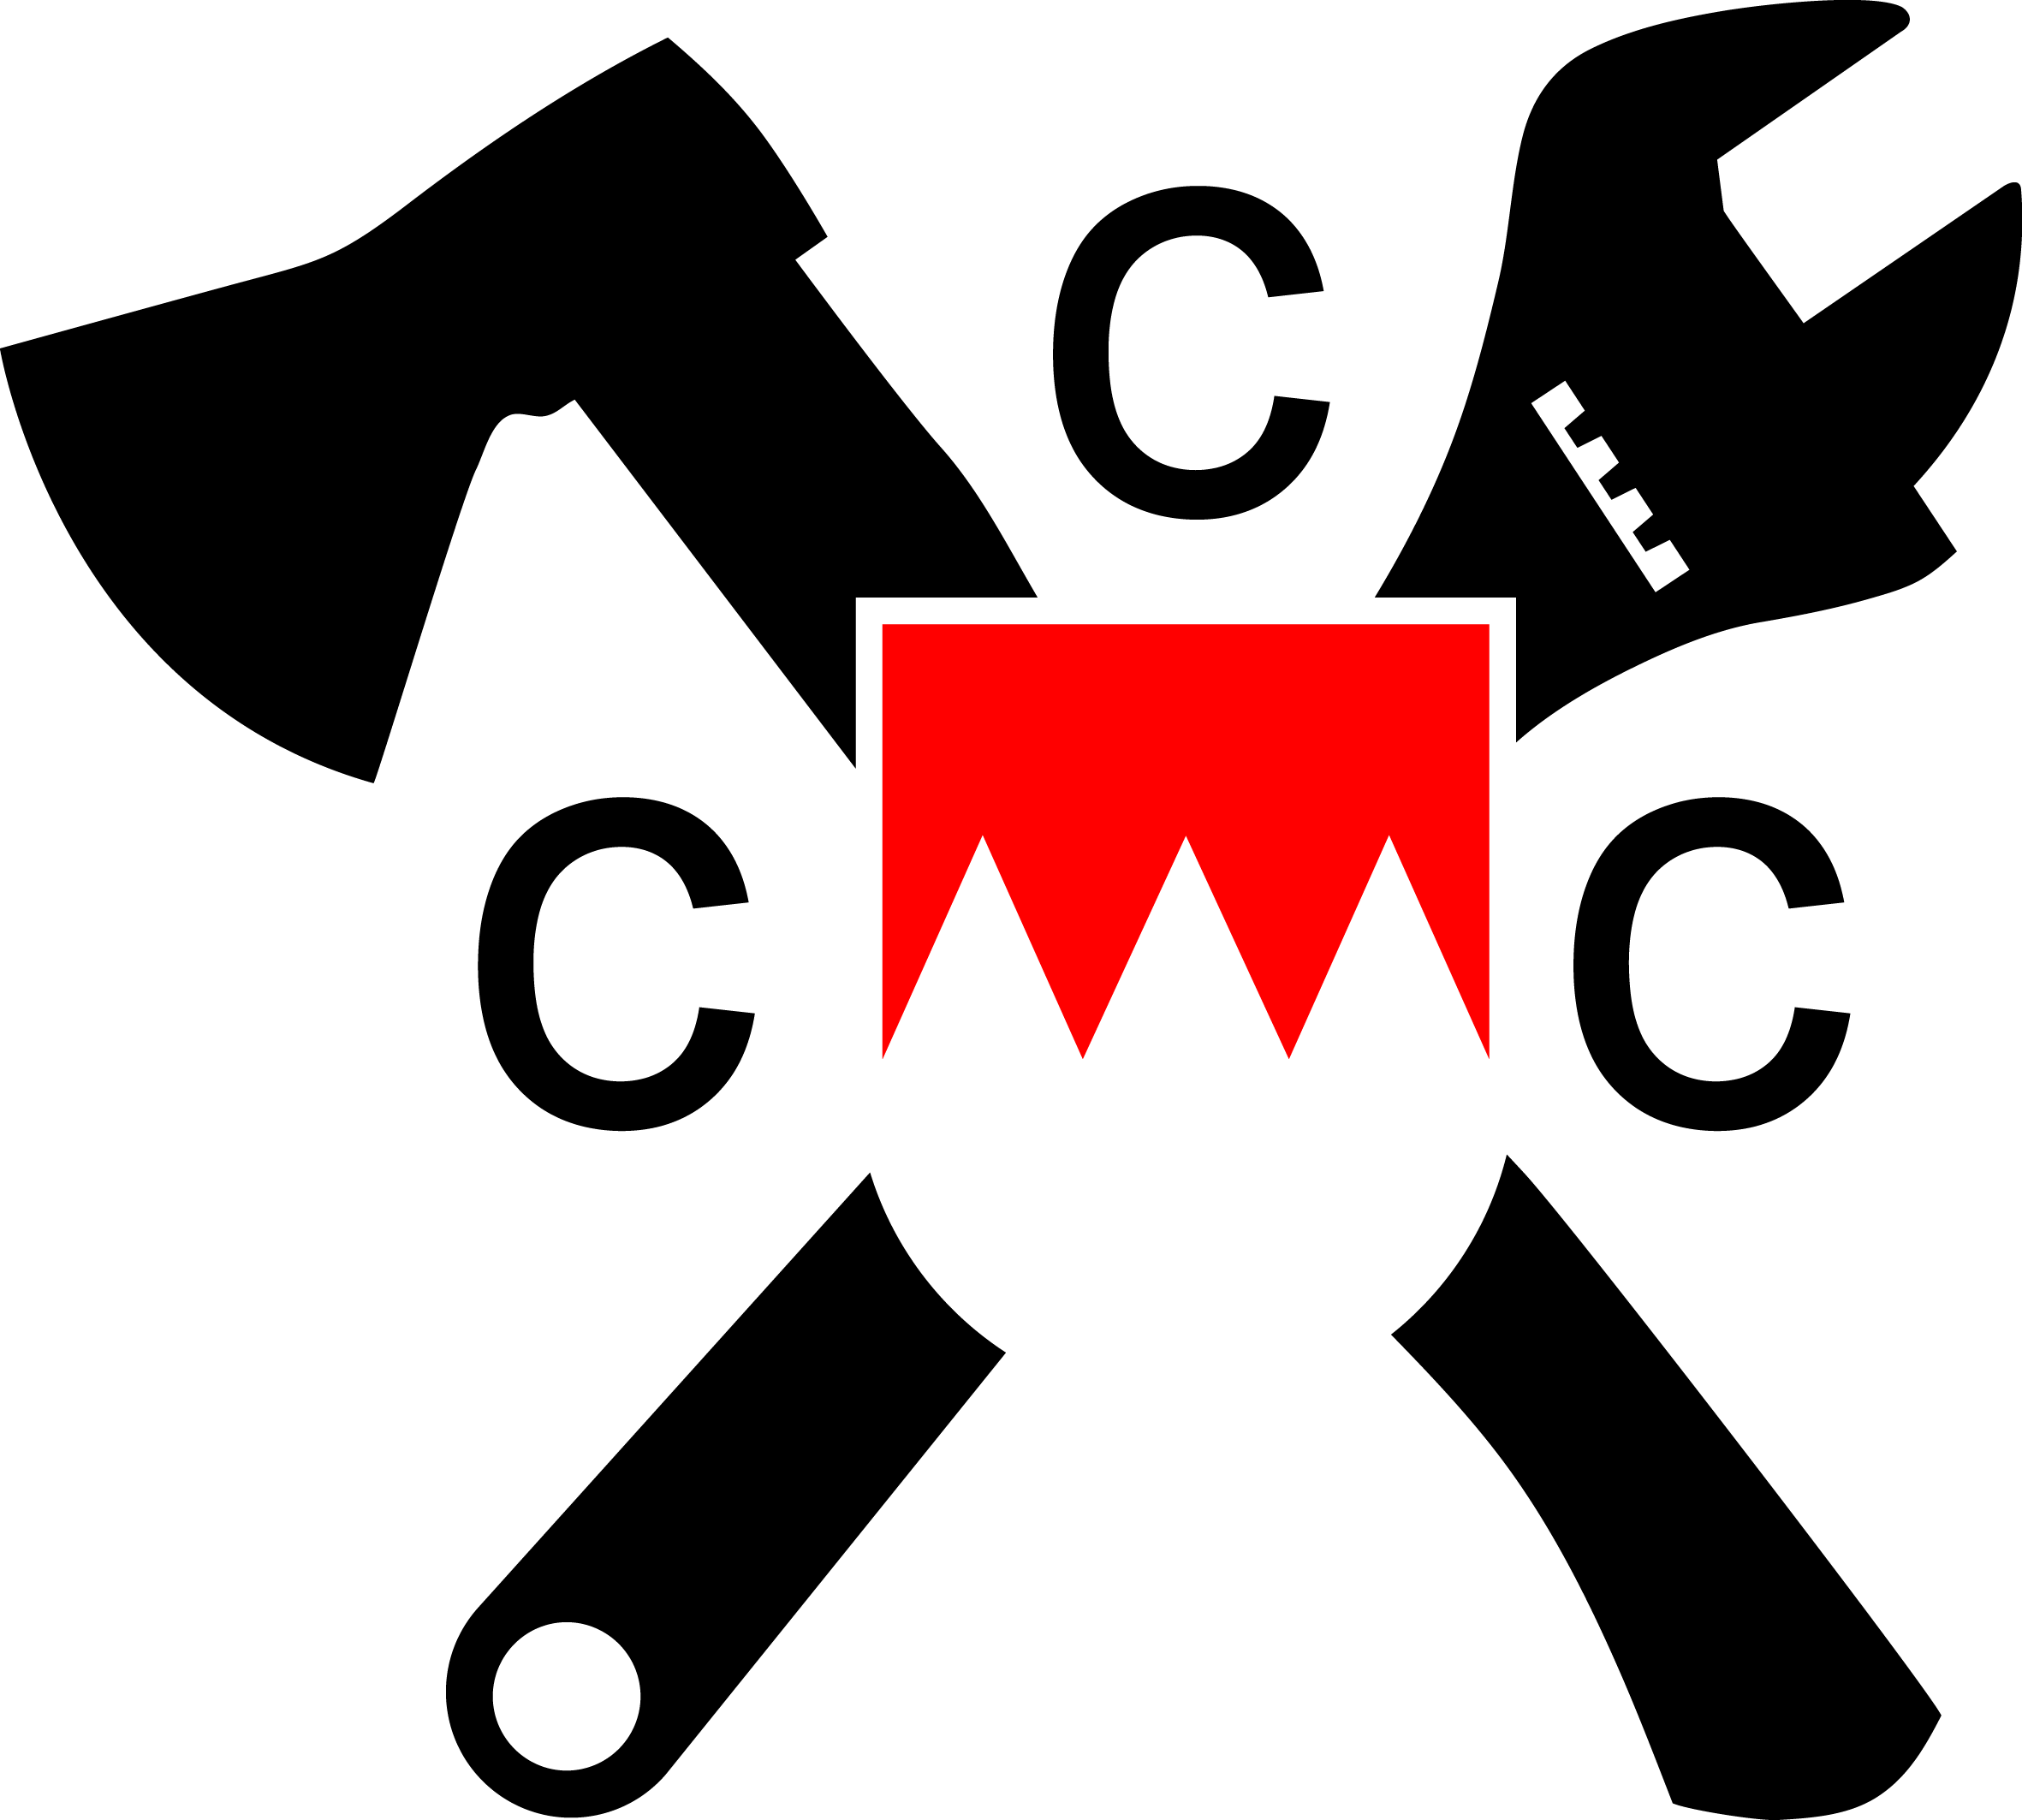 CCC Logo - File:CCC-Logo neu.png - Wikimedia Commons